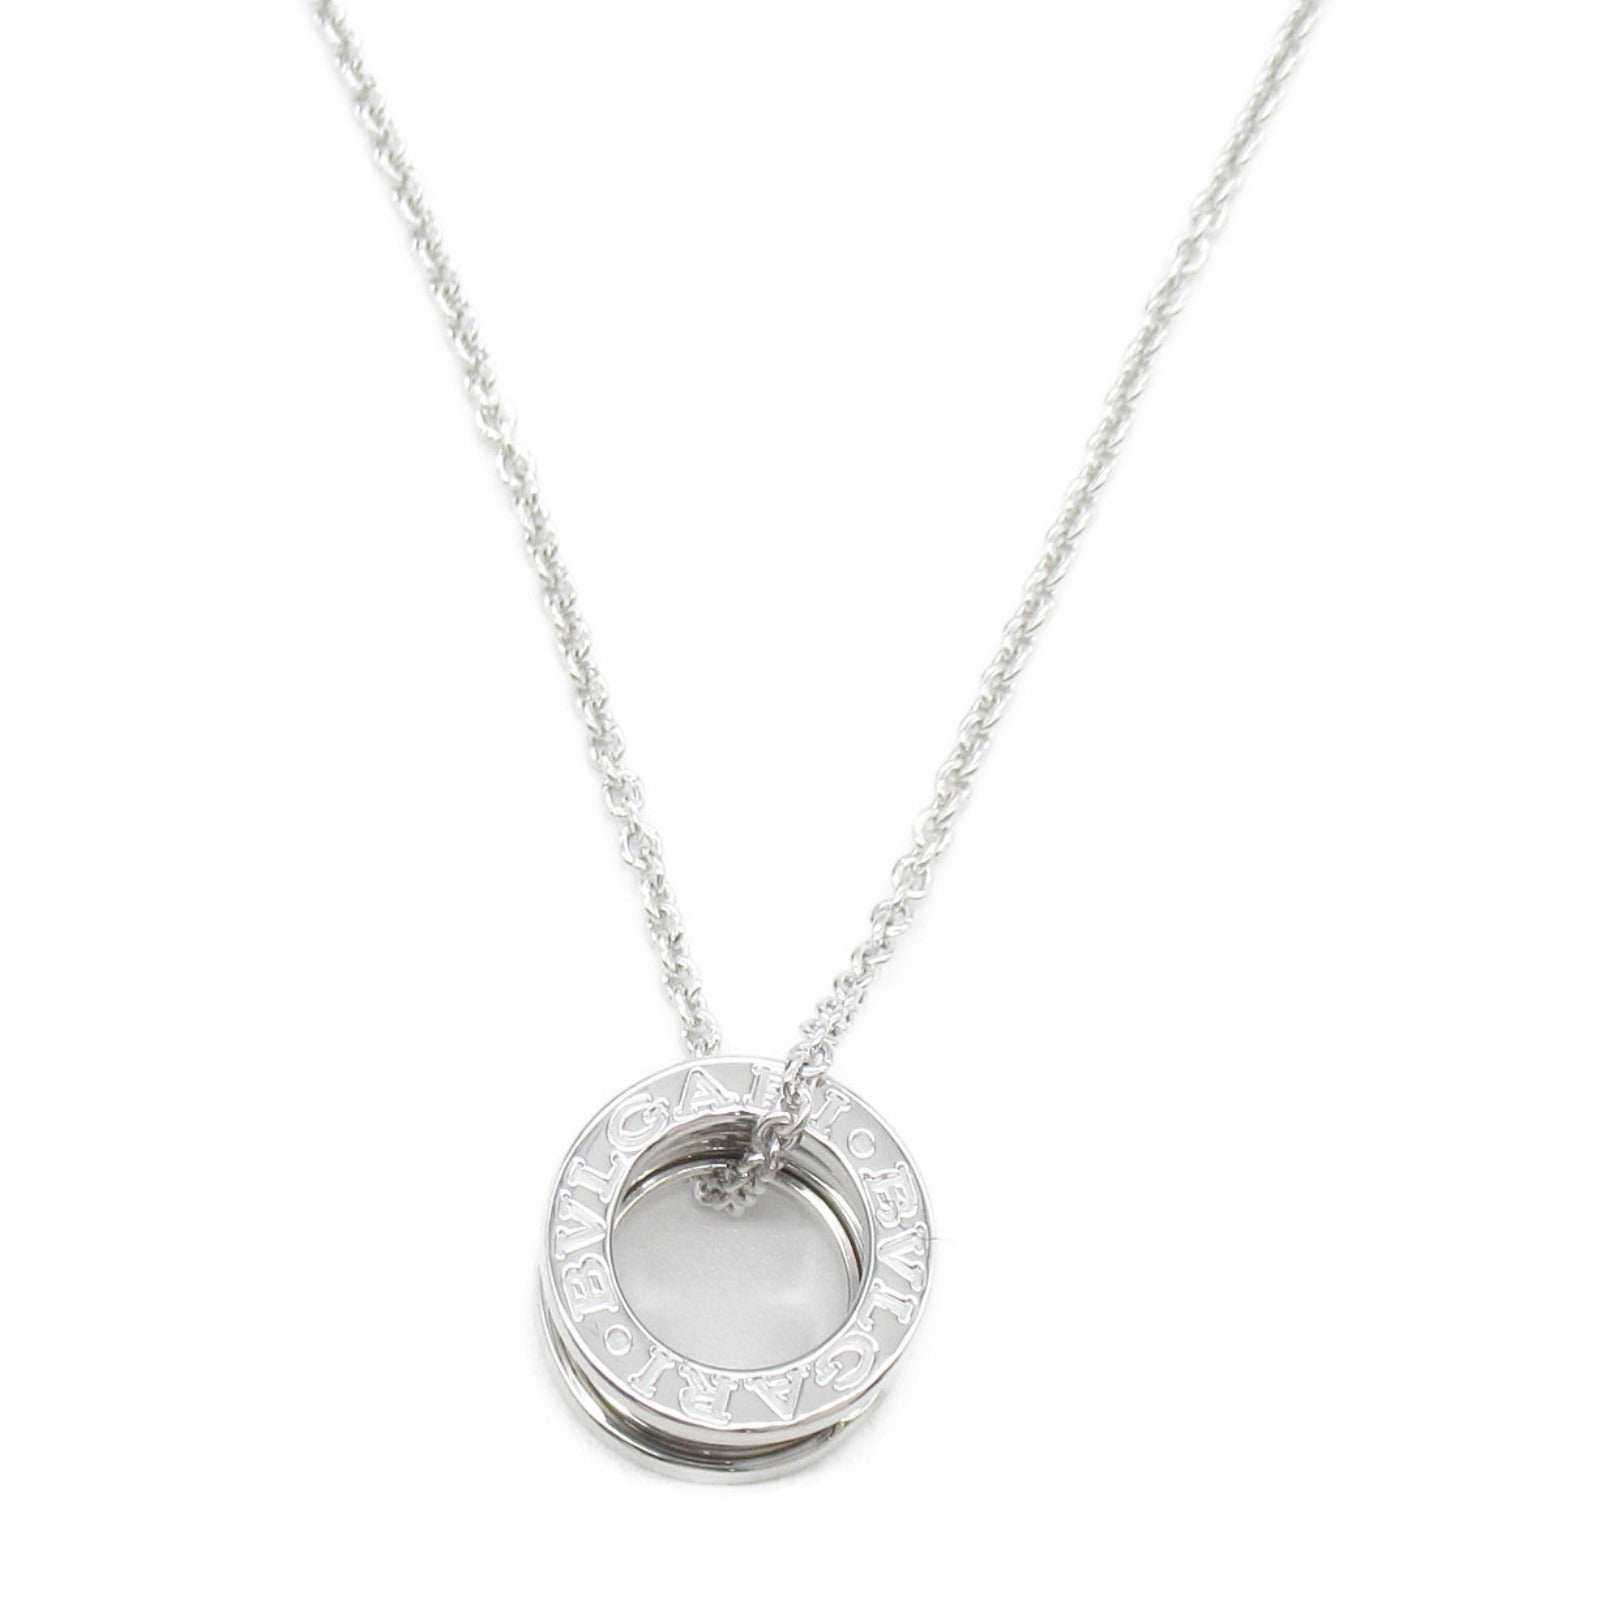 Bulgari BVLGARI B-zero1 Beezel one necklace necklace jewelry K18WG (White G)   Silver